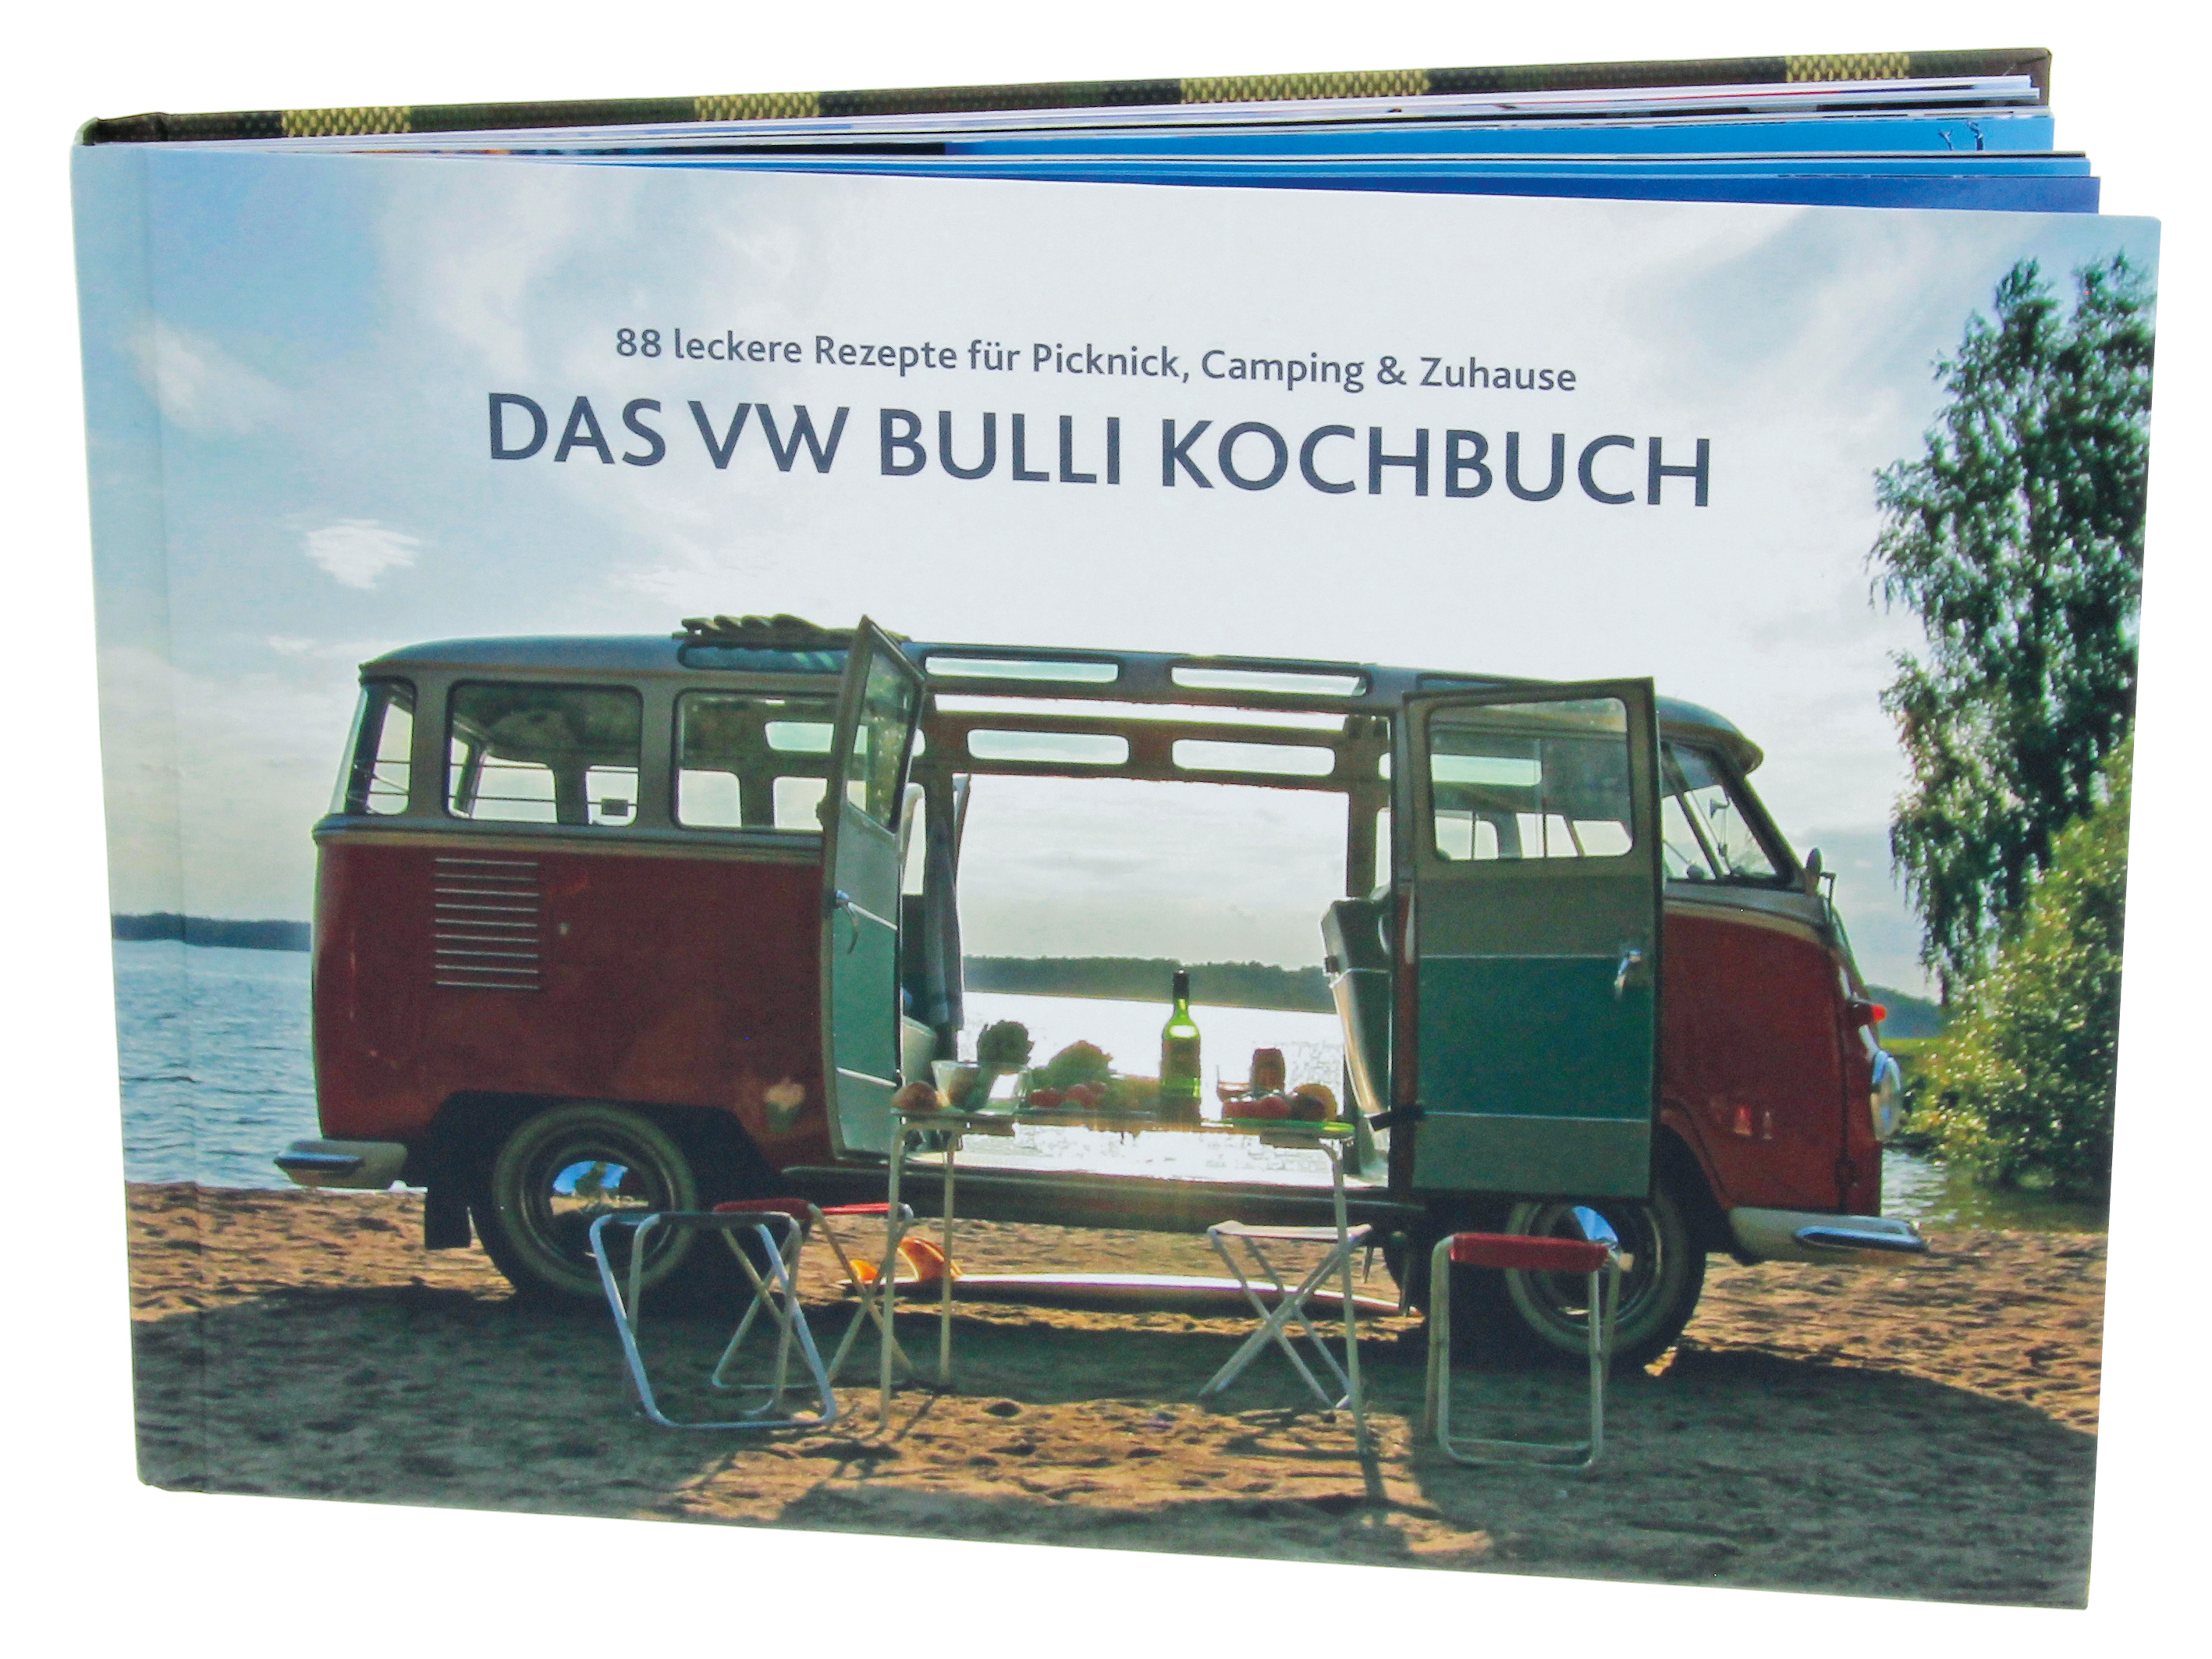 The VW Bulli Cookbook - in English (BUKBE03) or German (BUKBD03) edition